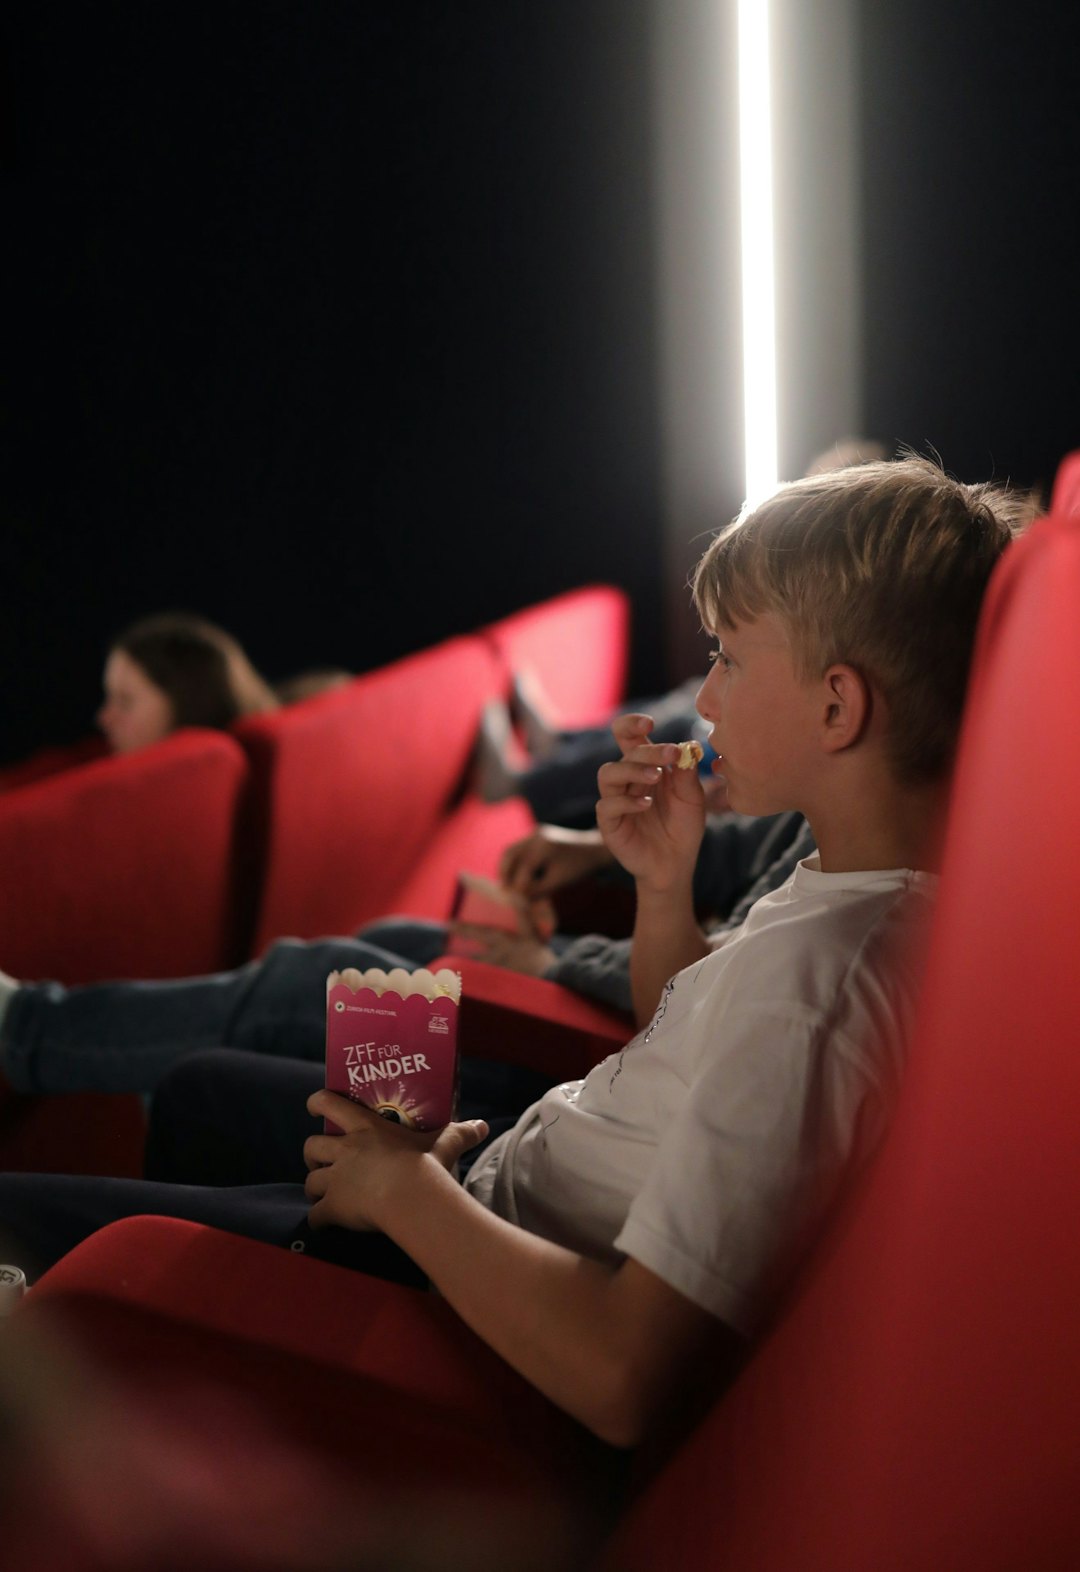 Children in a cinema auditorium.